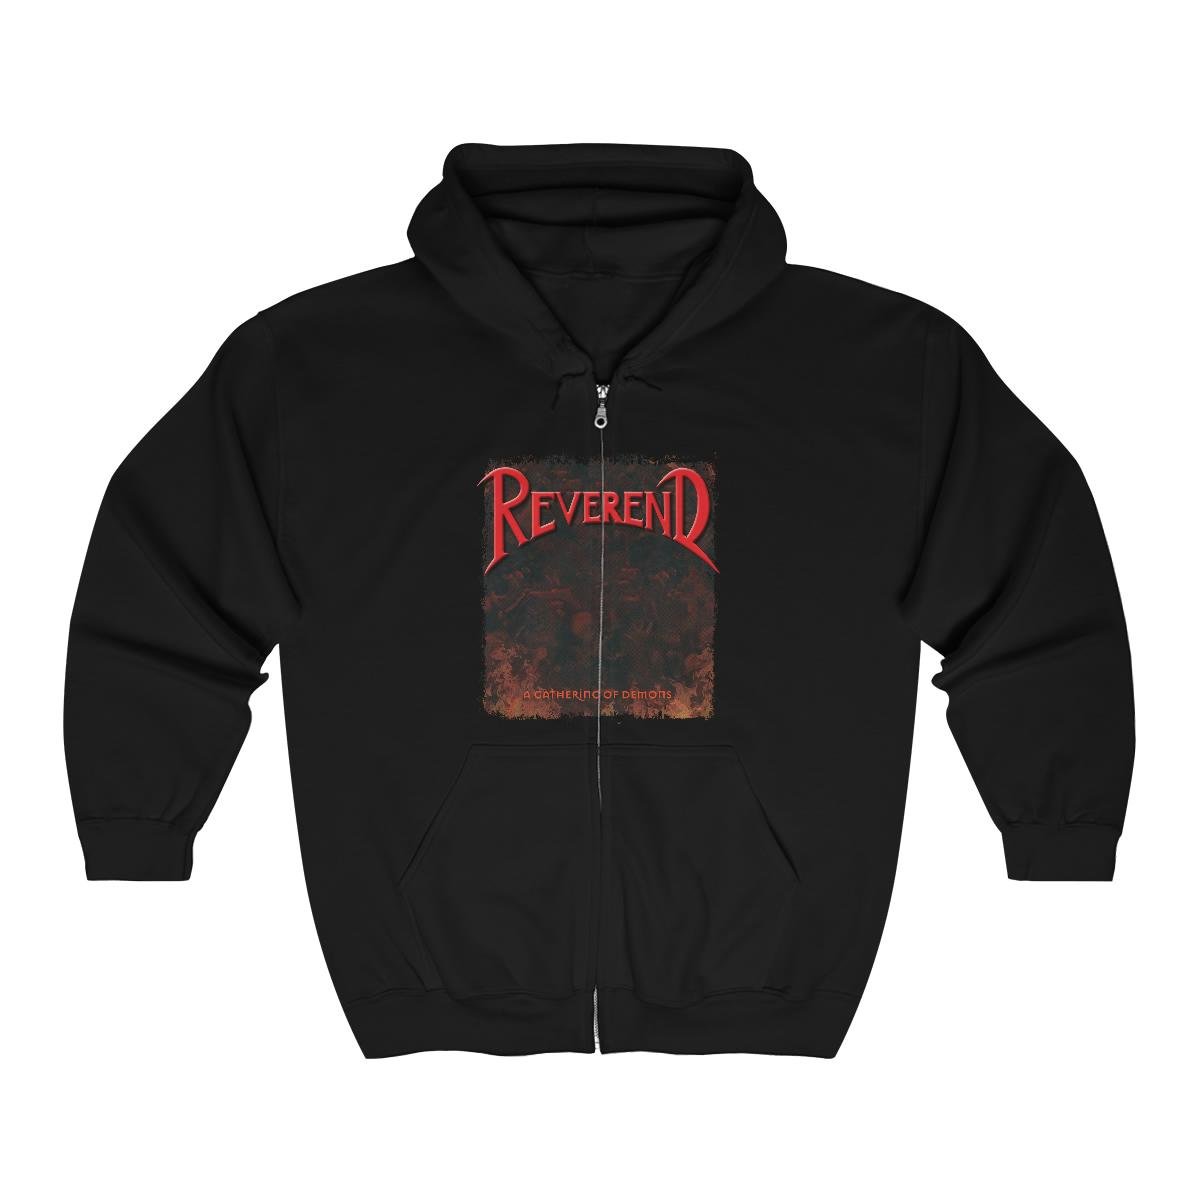 Reverend – A Gathering Of Demons New Cover Full Zip Hooded Sweatshirt